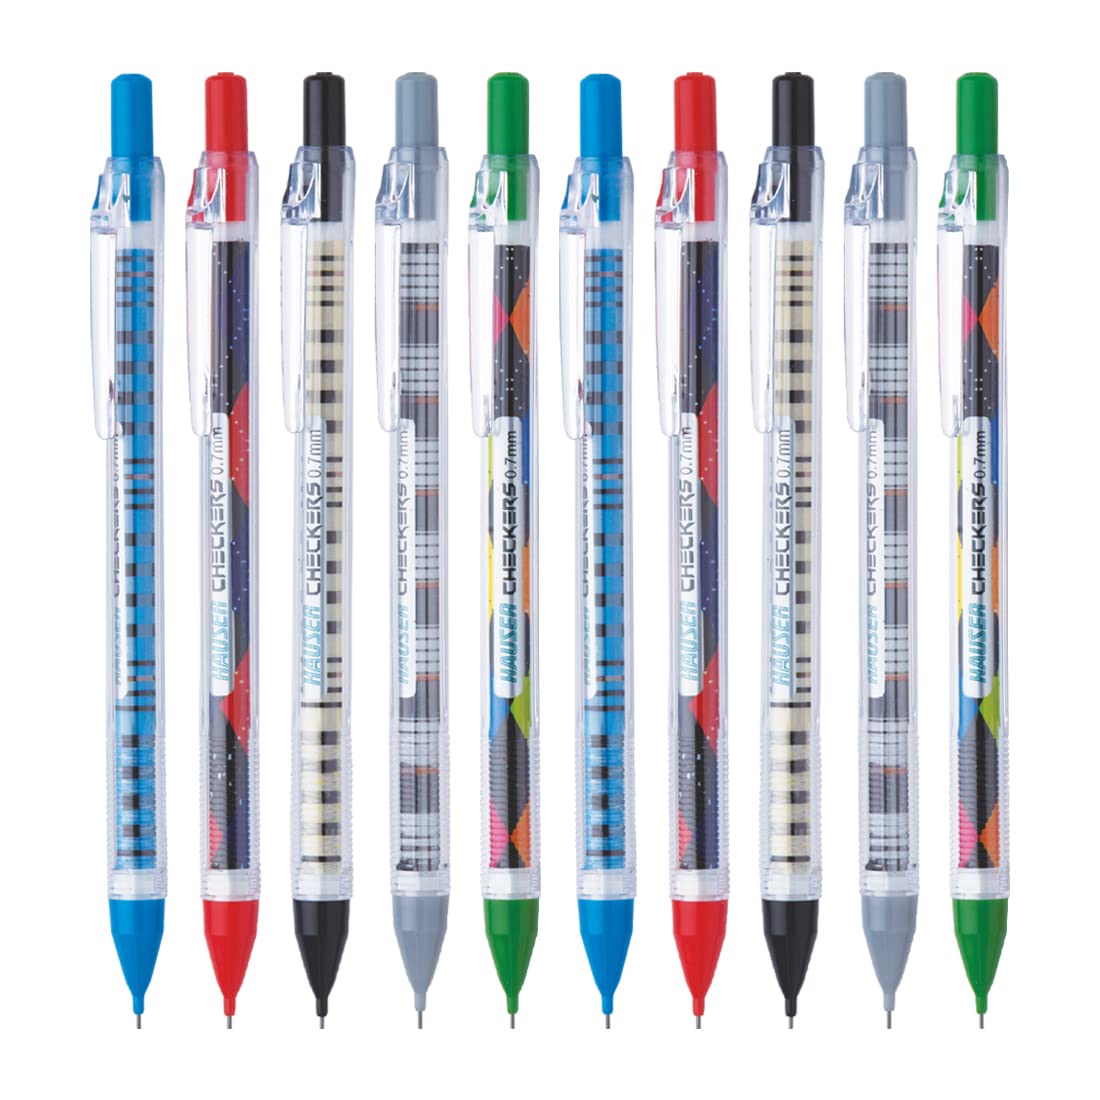 Hauser Checkers 0.7 mm Mechanical Pencil - Multicolor Body